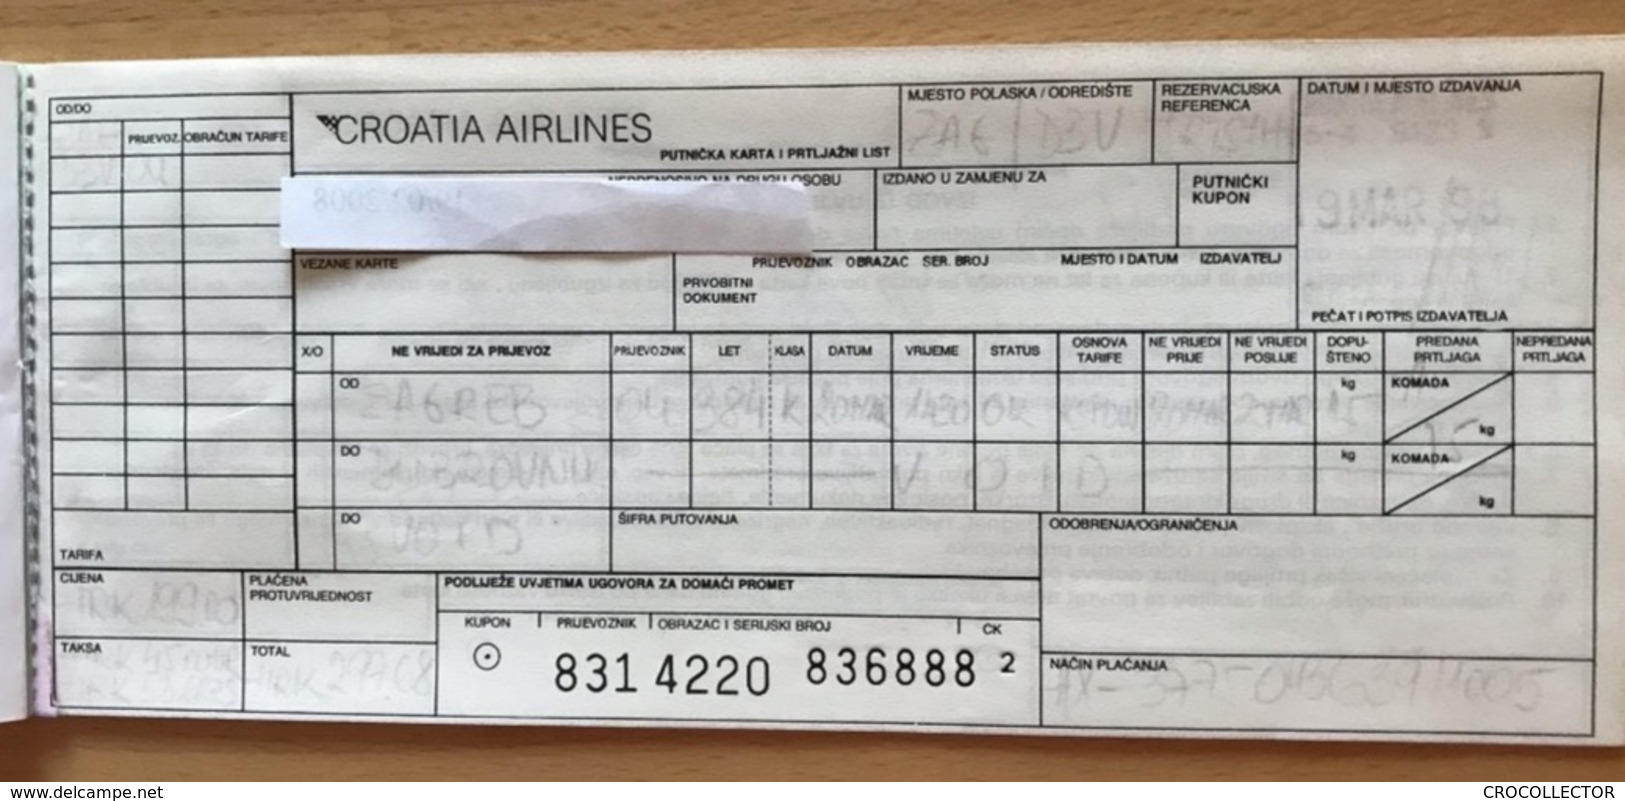 CROATIA AIRLINES TICKET 20MAR98 ZAGREB DUBROVNIK - Billetes